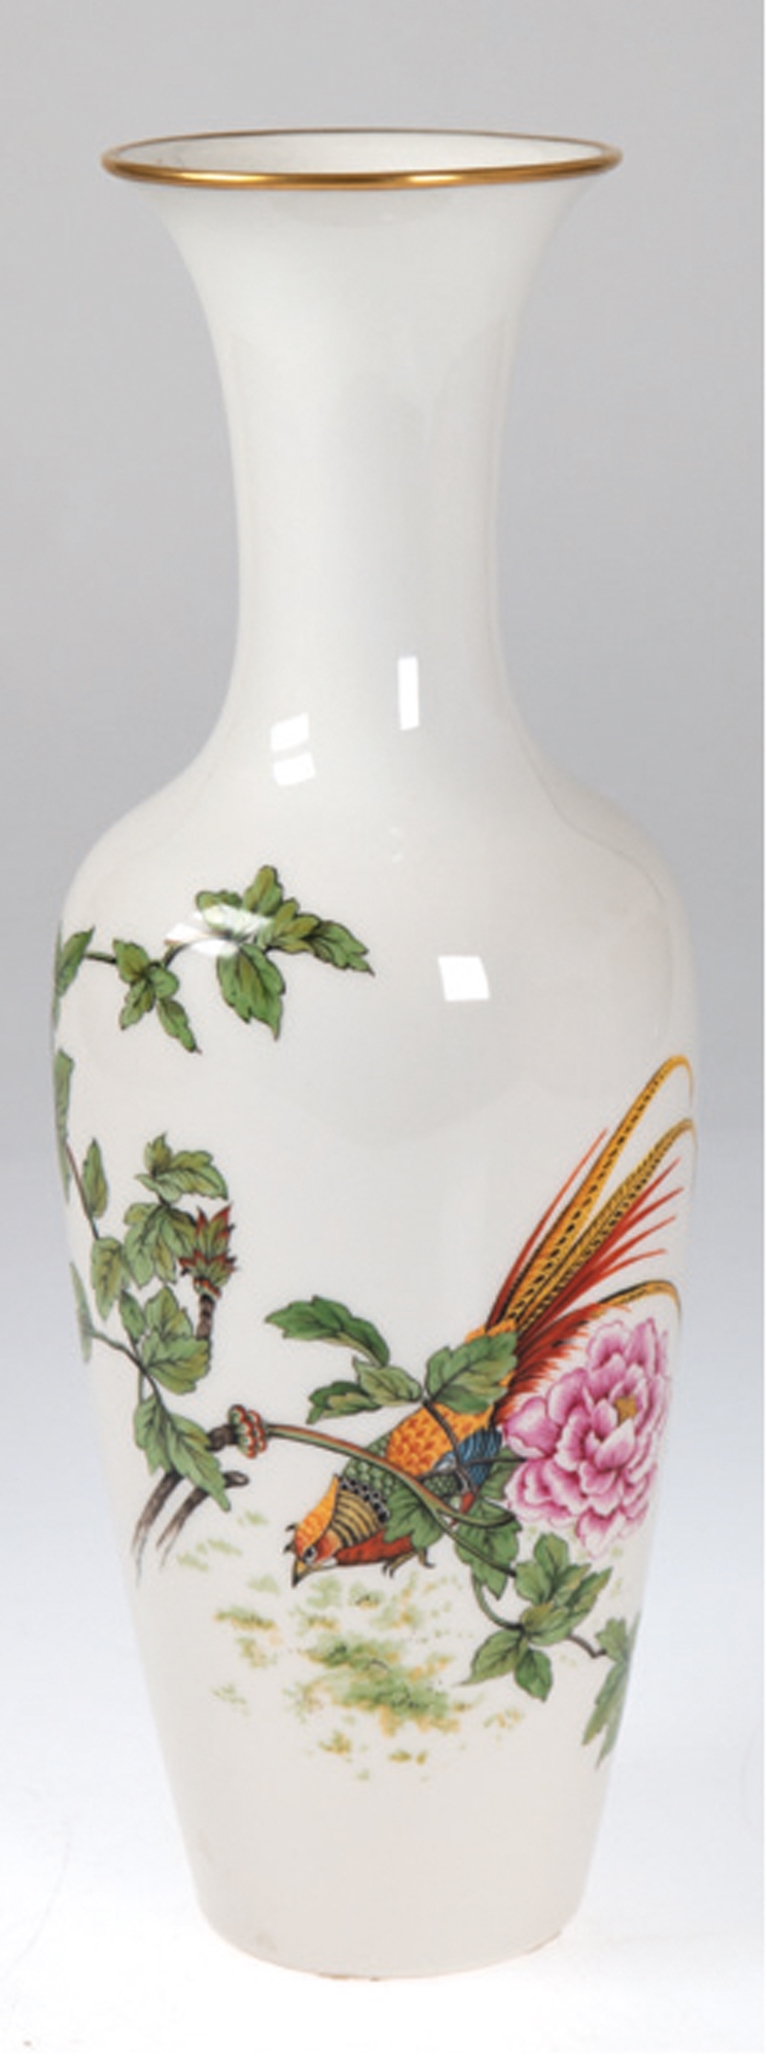 KPM-Vase, polychrome Floral- und Vogelbemalung, unterseitig sign. "handbemalt Monika Hampel", Goldr